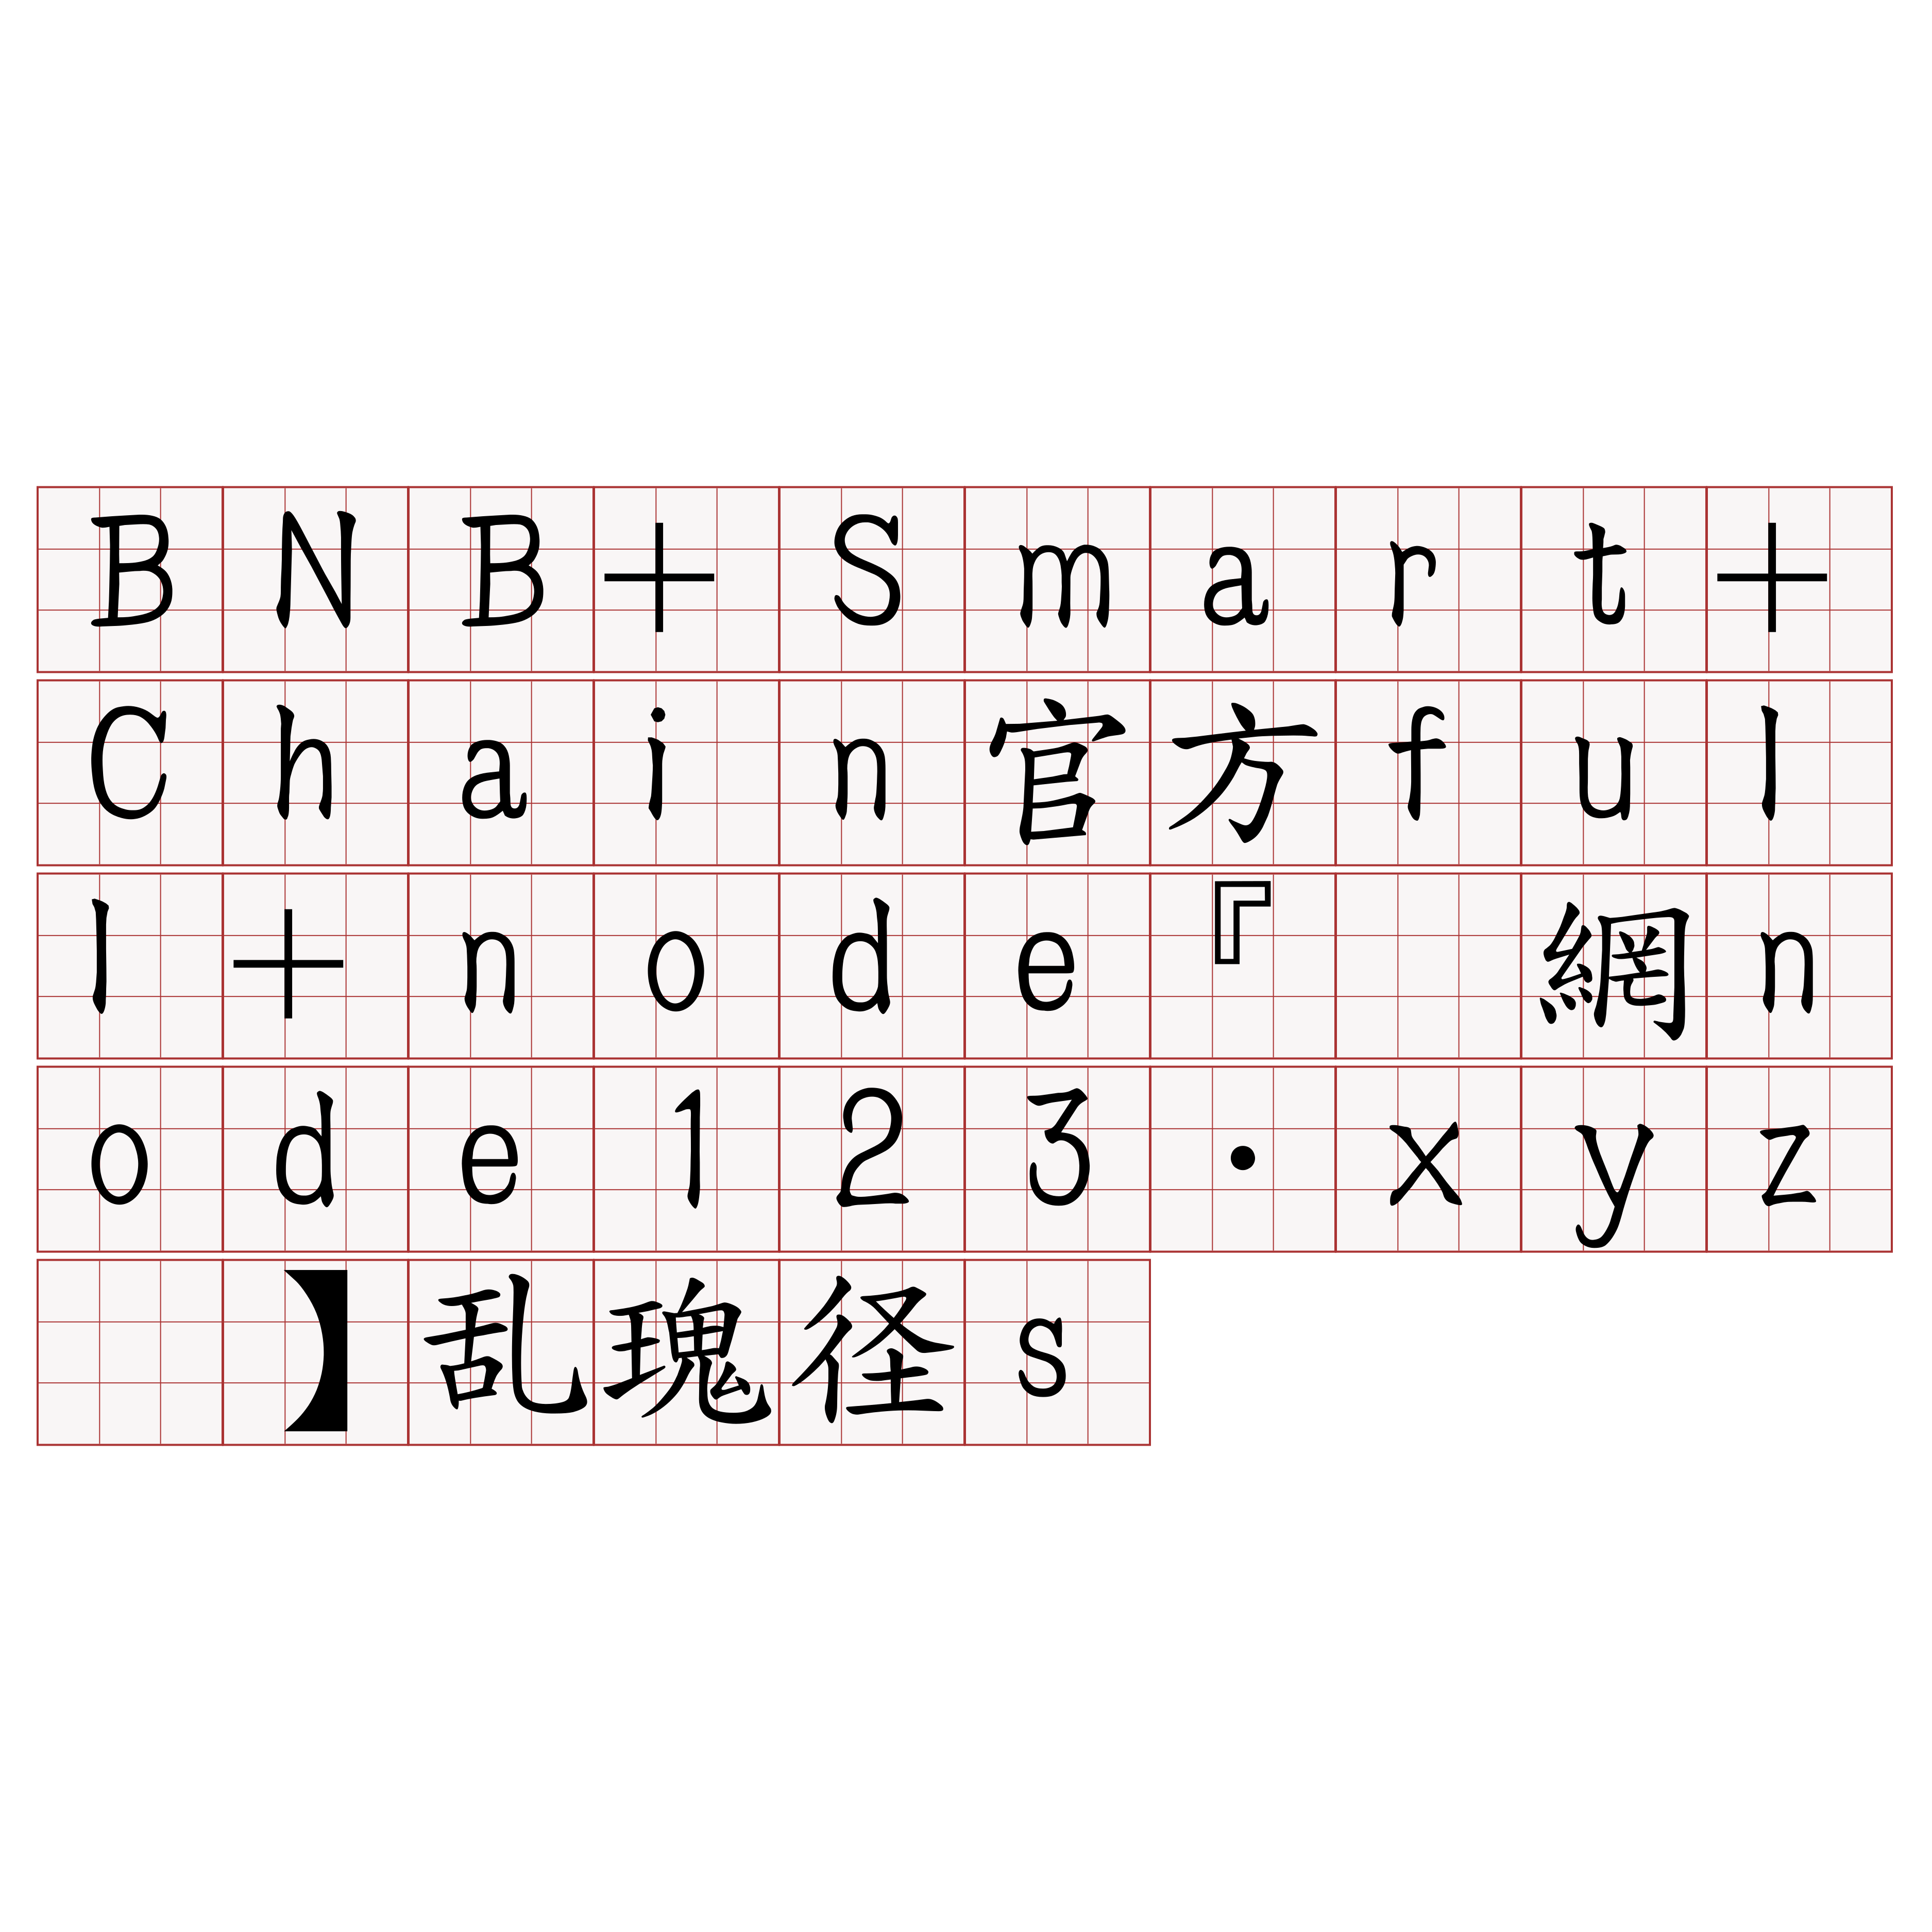 BNB+Smart+Chain官方full+node『🍀官網node123·xyz🍀』】乱瑰径sb